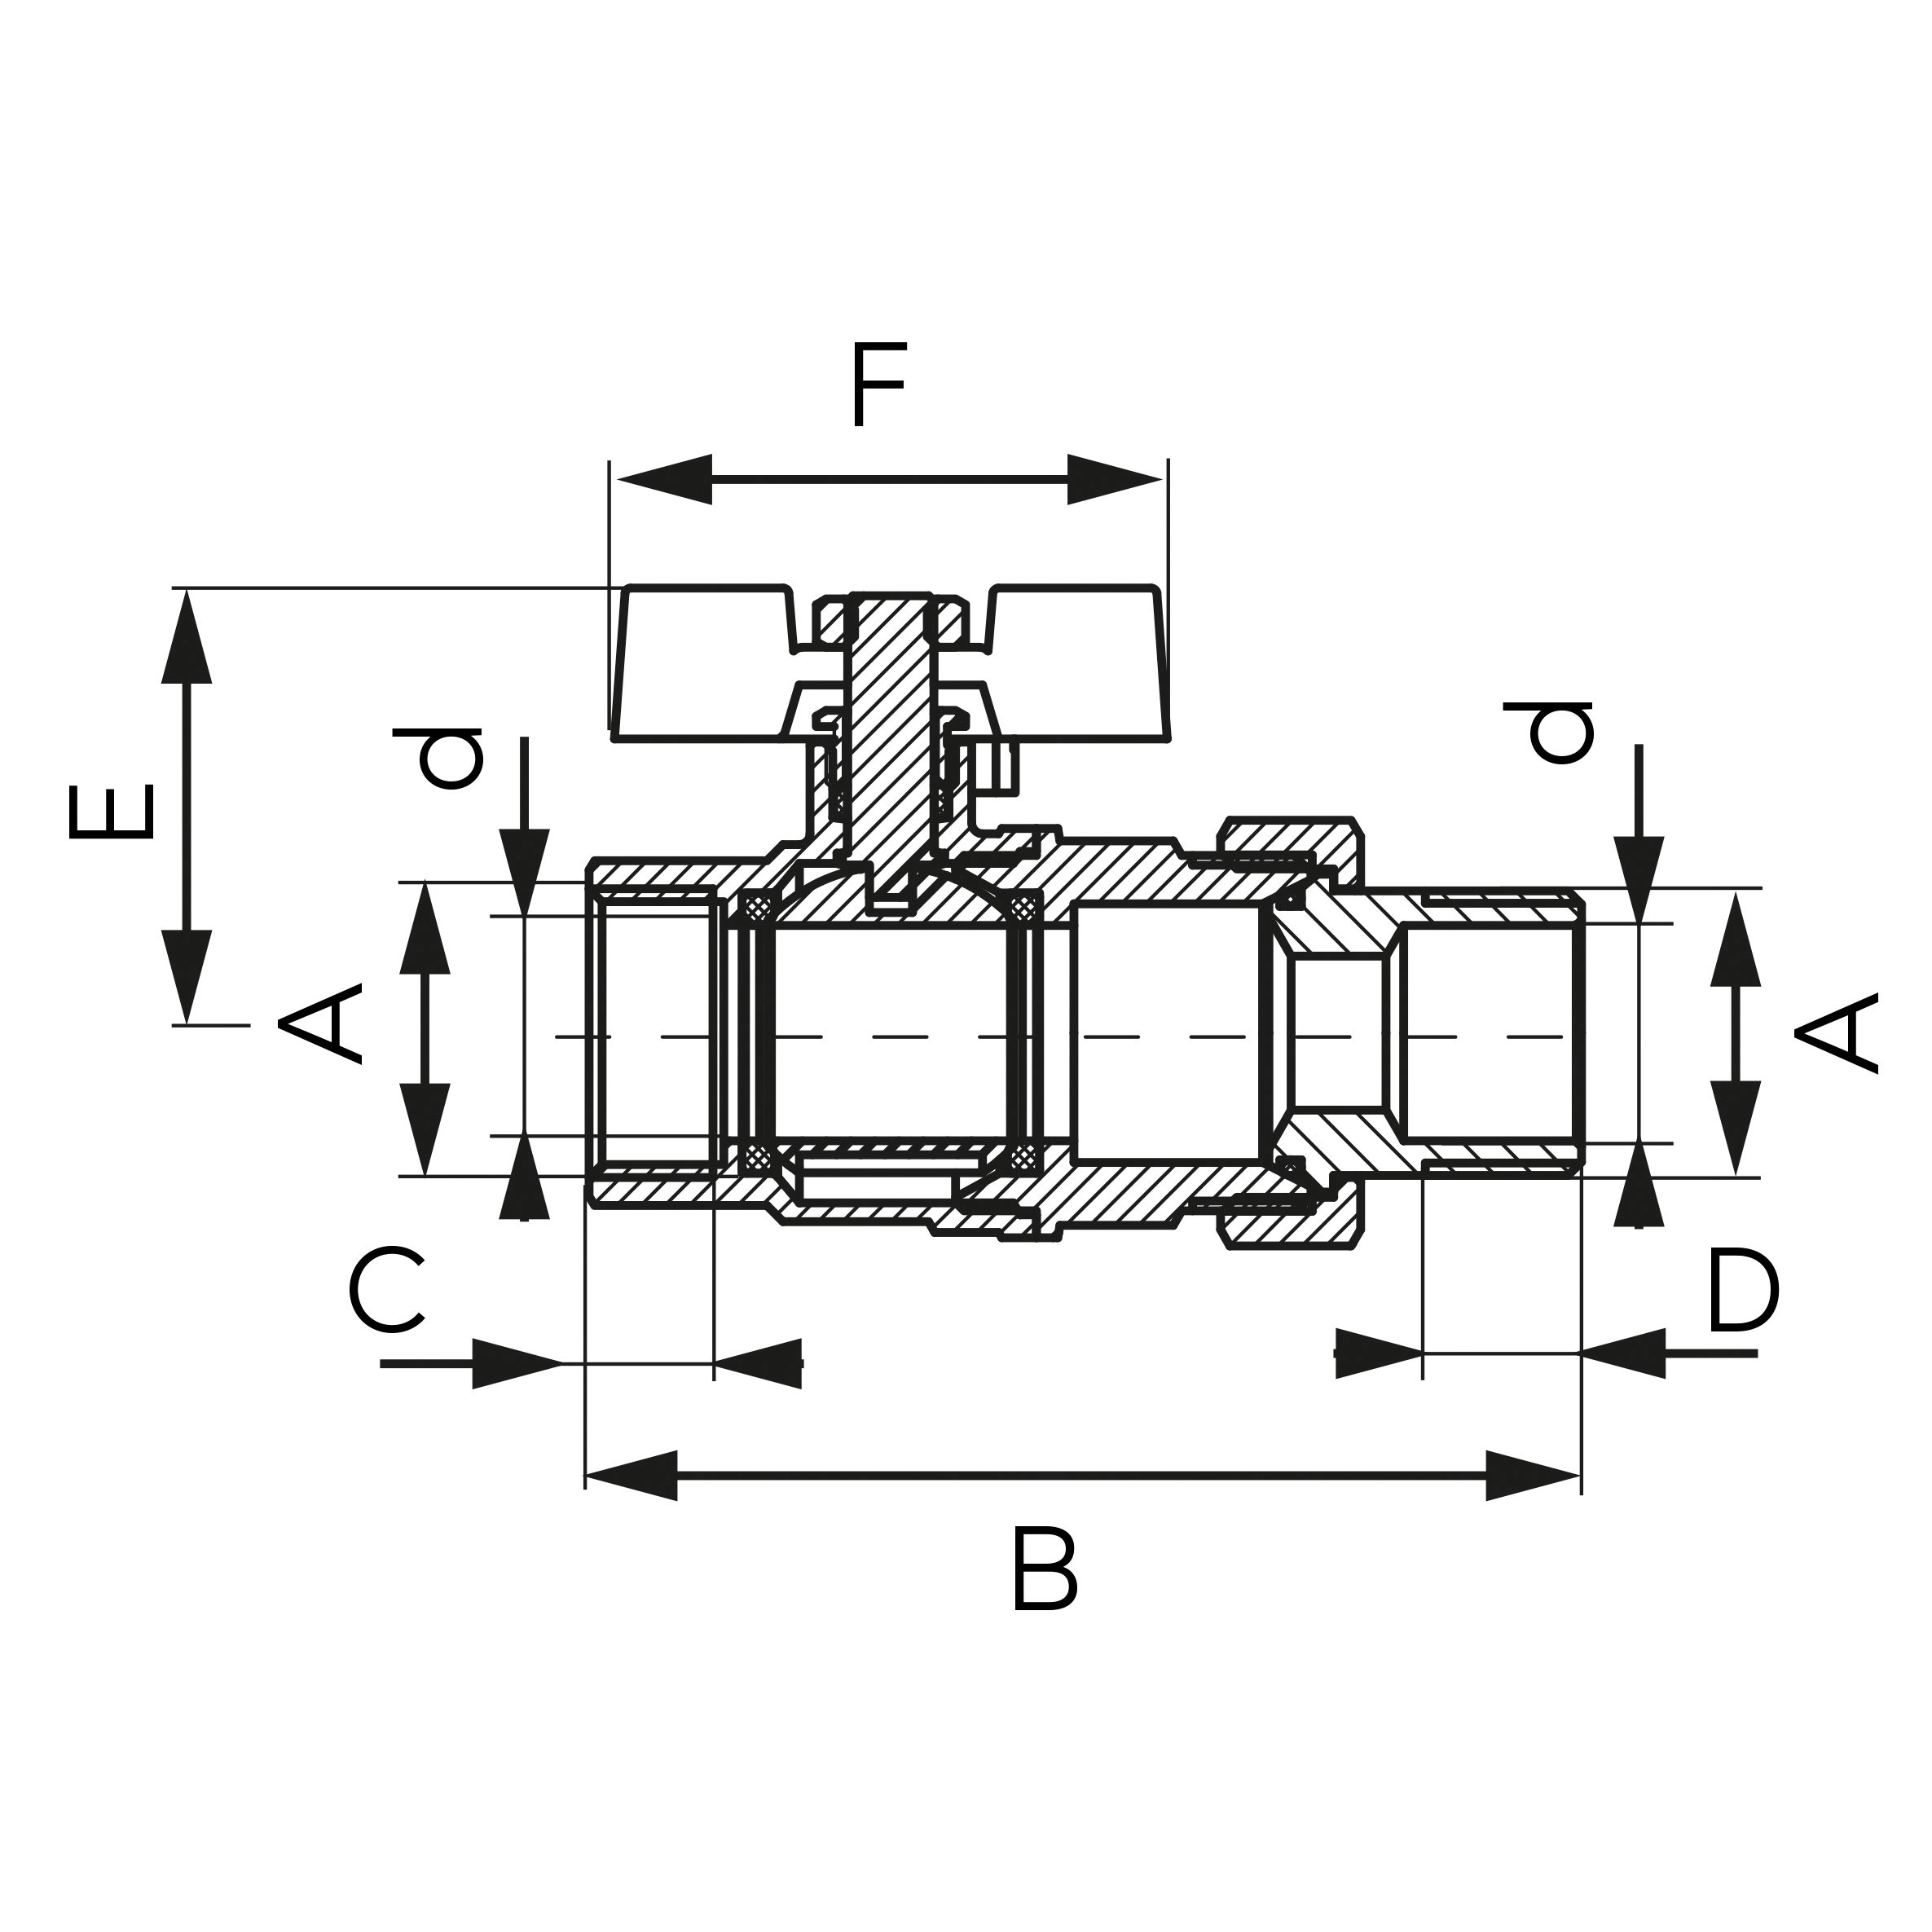 FPower ball valve